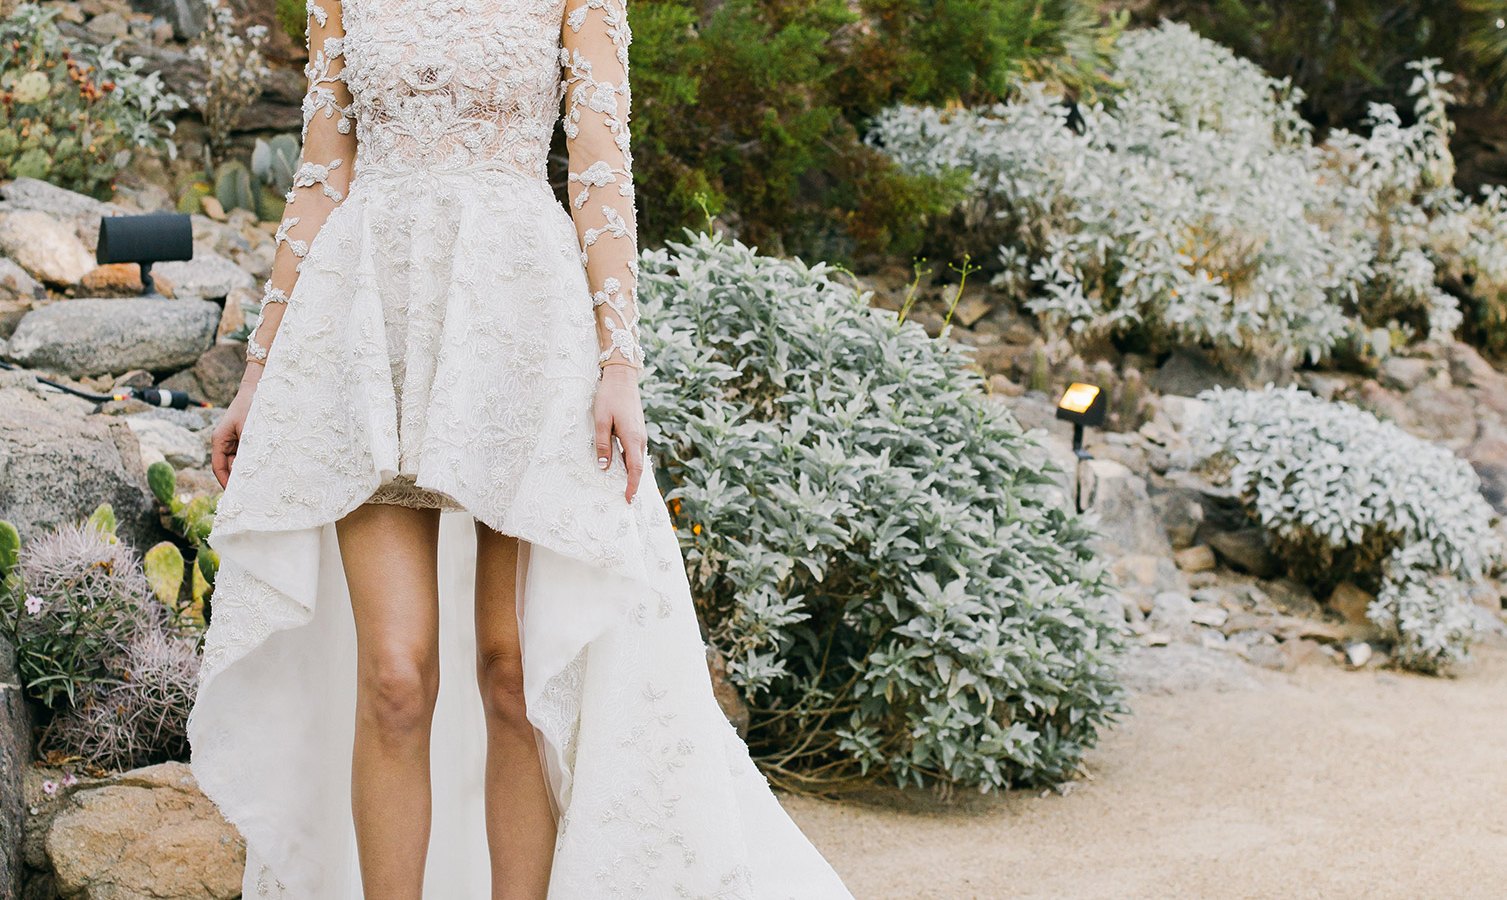 At Long Last, We See Pictures of Lauren Conrad's Wedding Dress(es